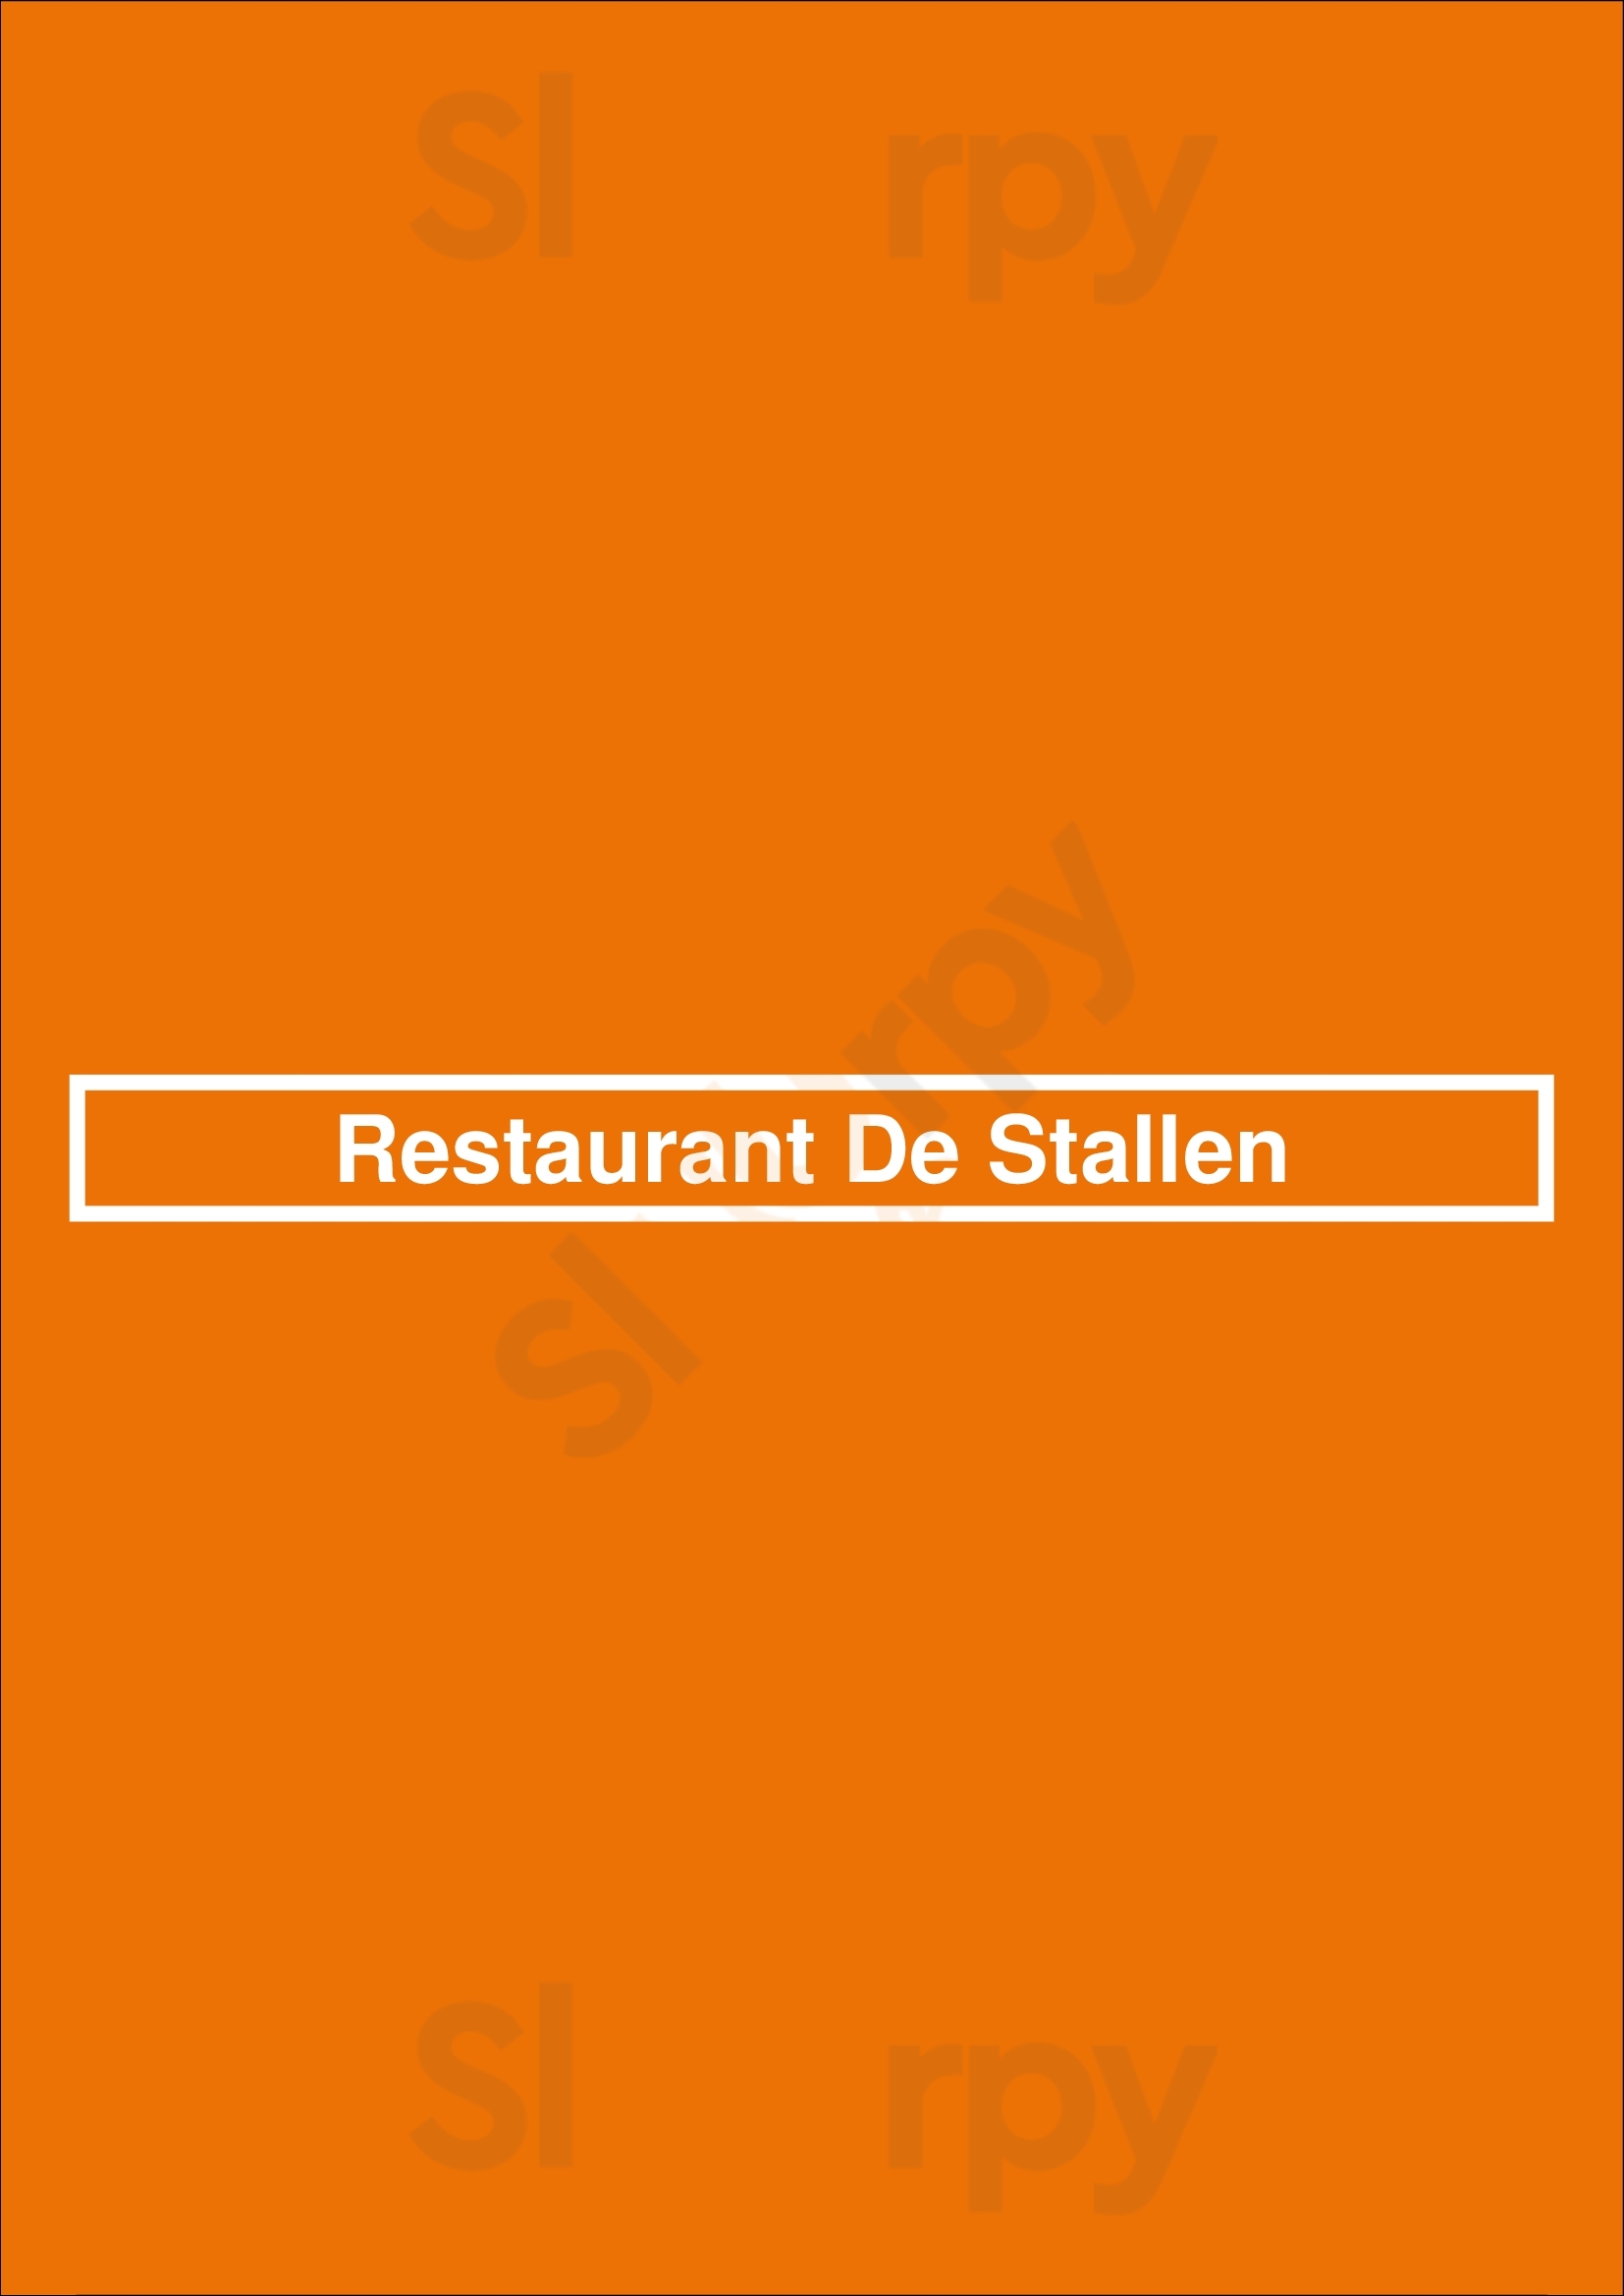 Restaurant De Stallen Purmerend Menu - 1